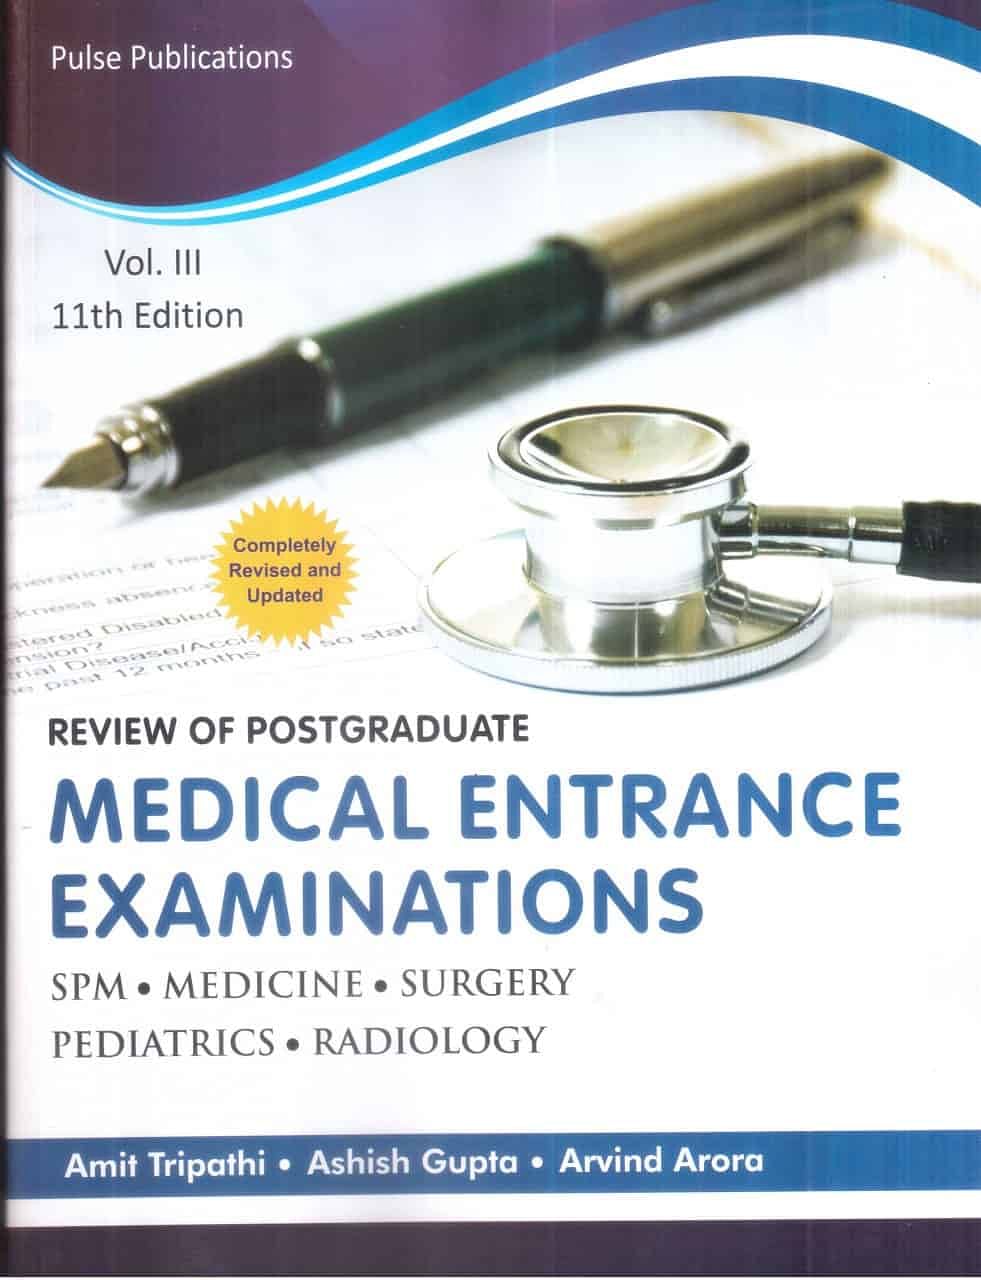 Review of Post Graduate Medical Entrance Examinations (Pathology, Microbiology, Surgery, ENT, Orthopaedics, Skin, Anaesthesia) by Amit Tripathi/Ashish Gupta/Arvind Arora.